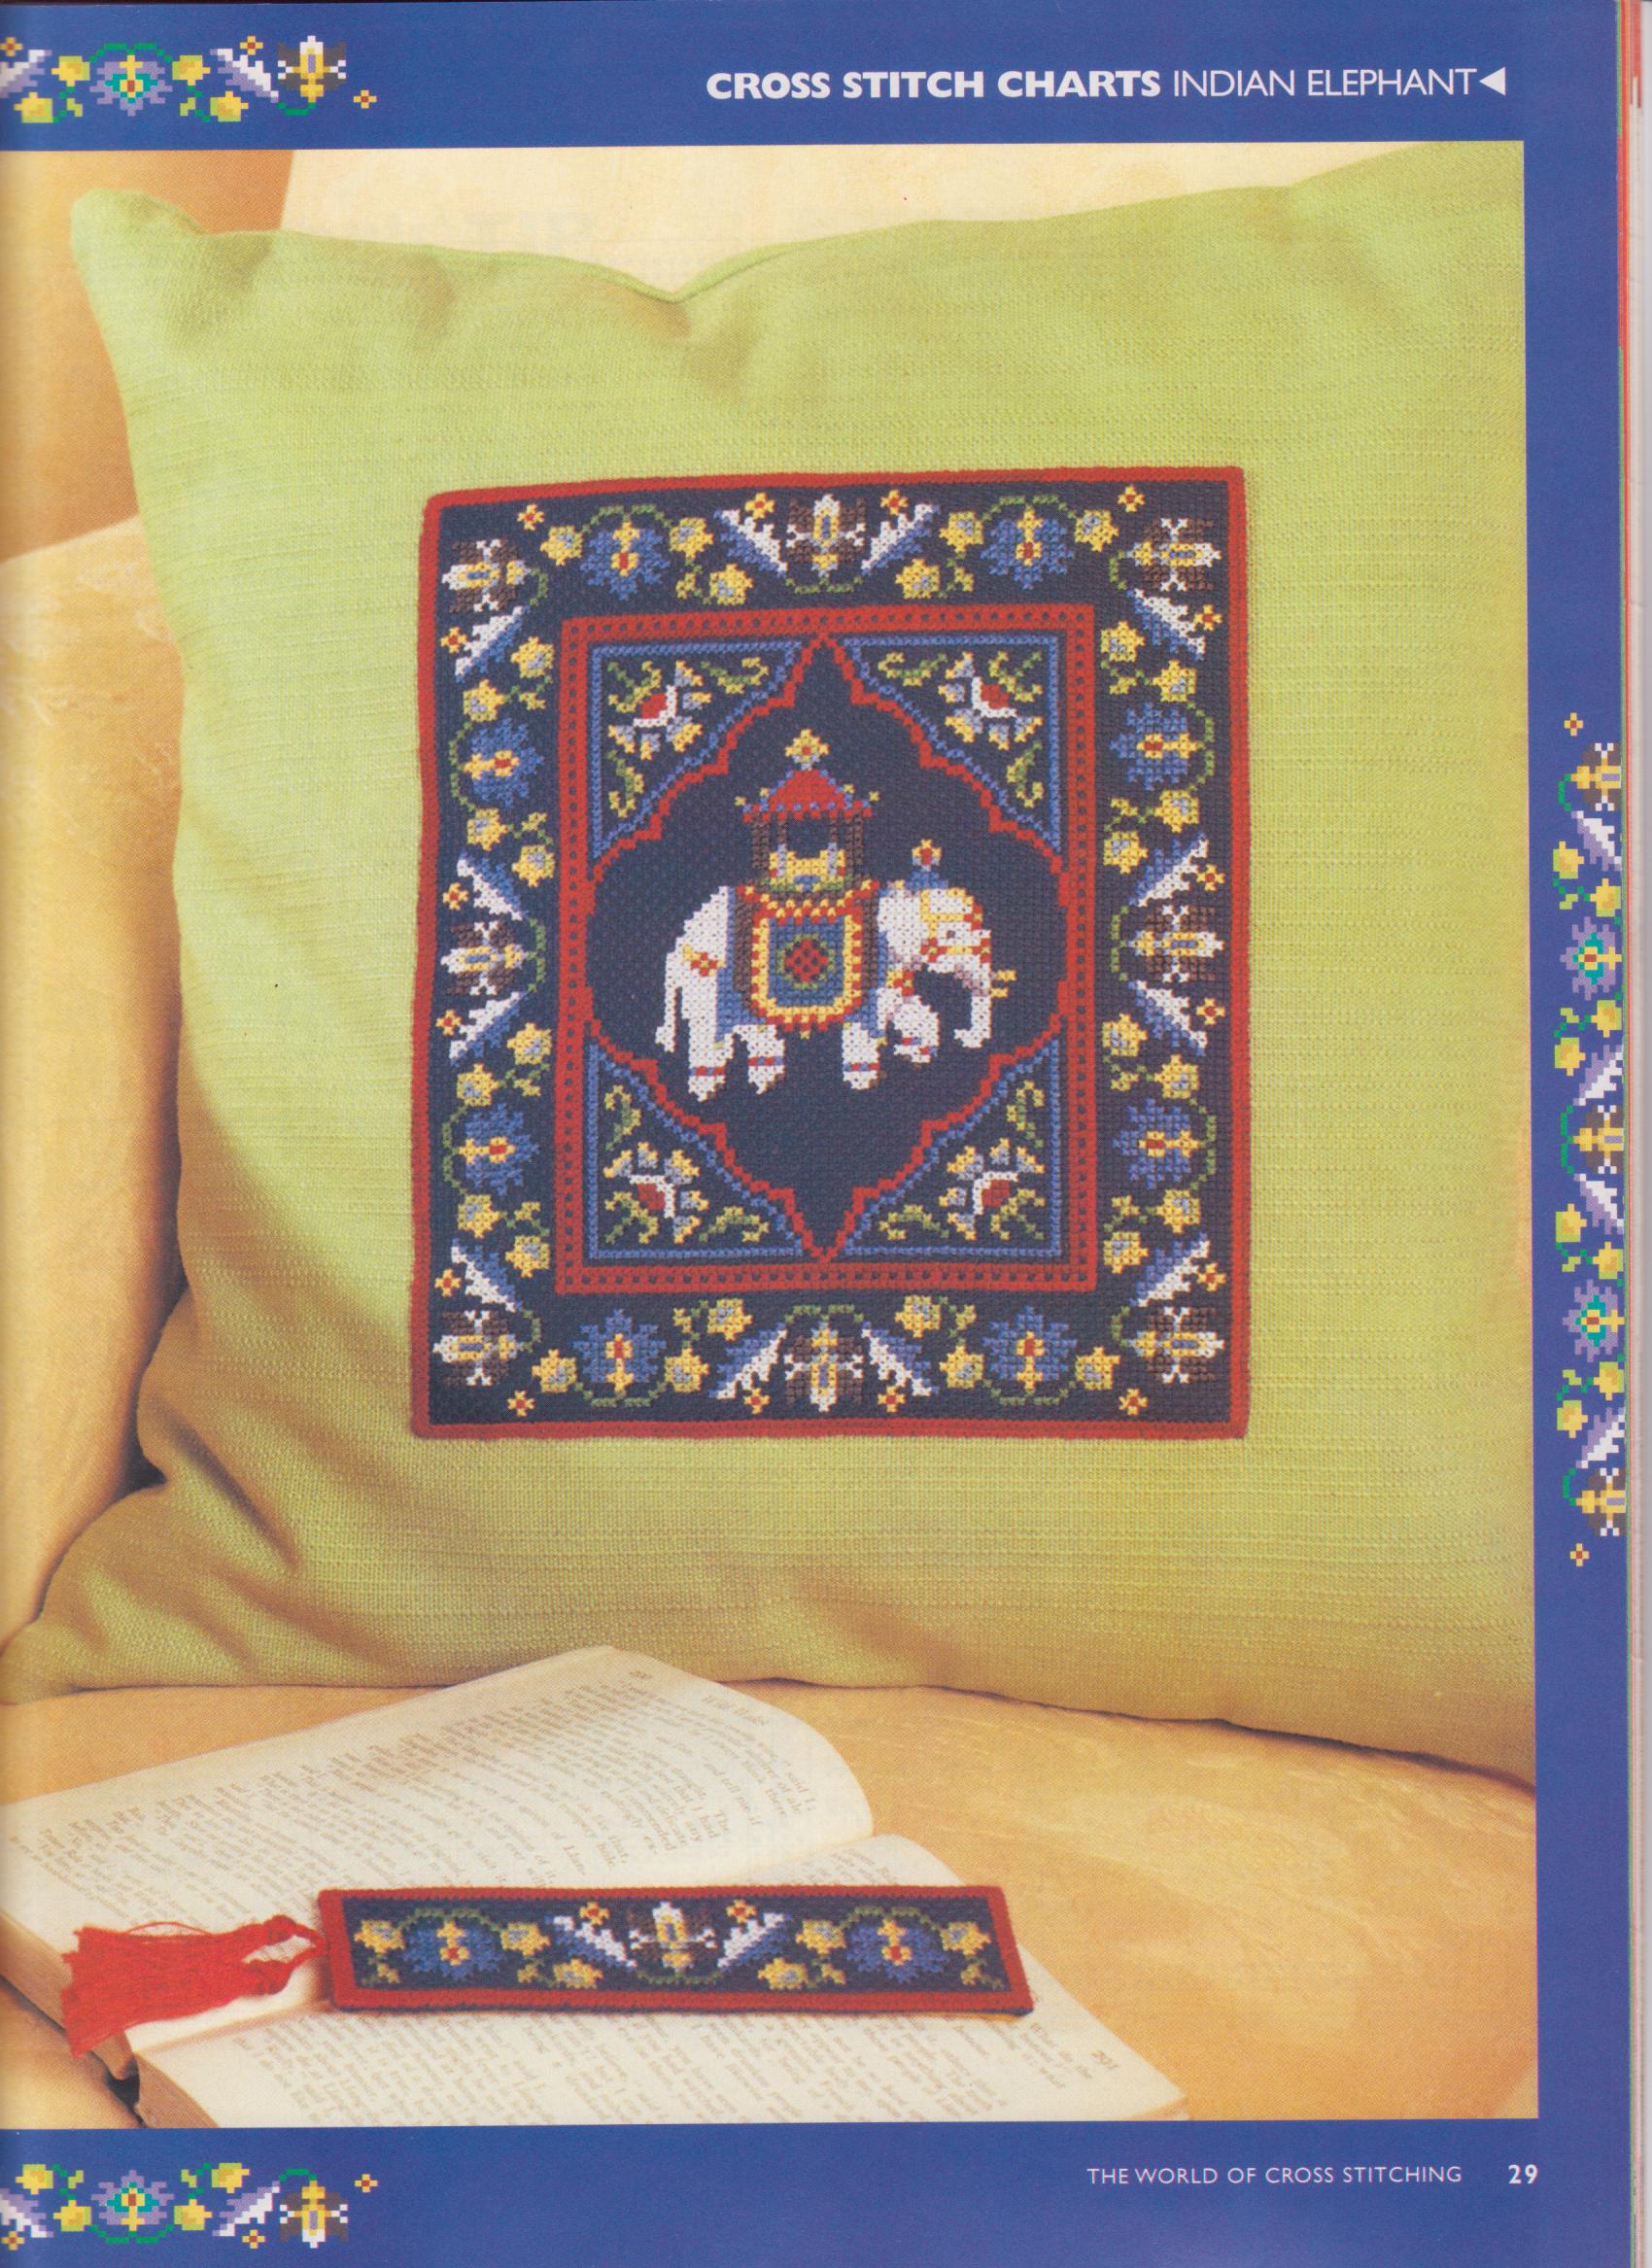 Cross stitch cushion with Indian elephant (2)